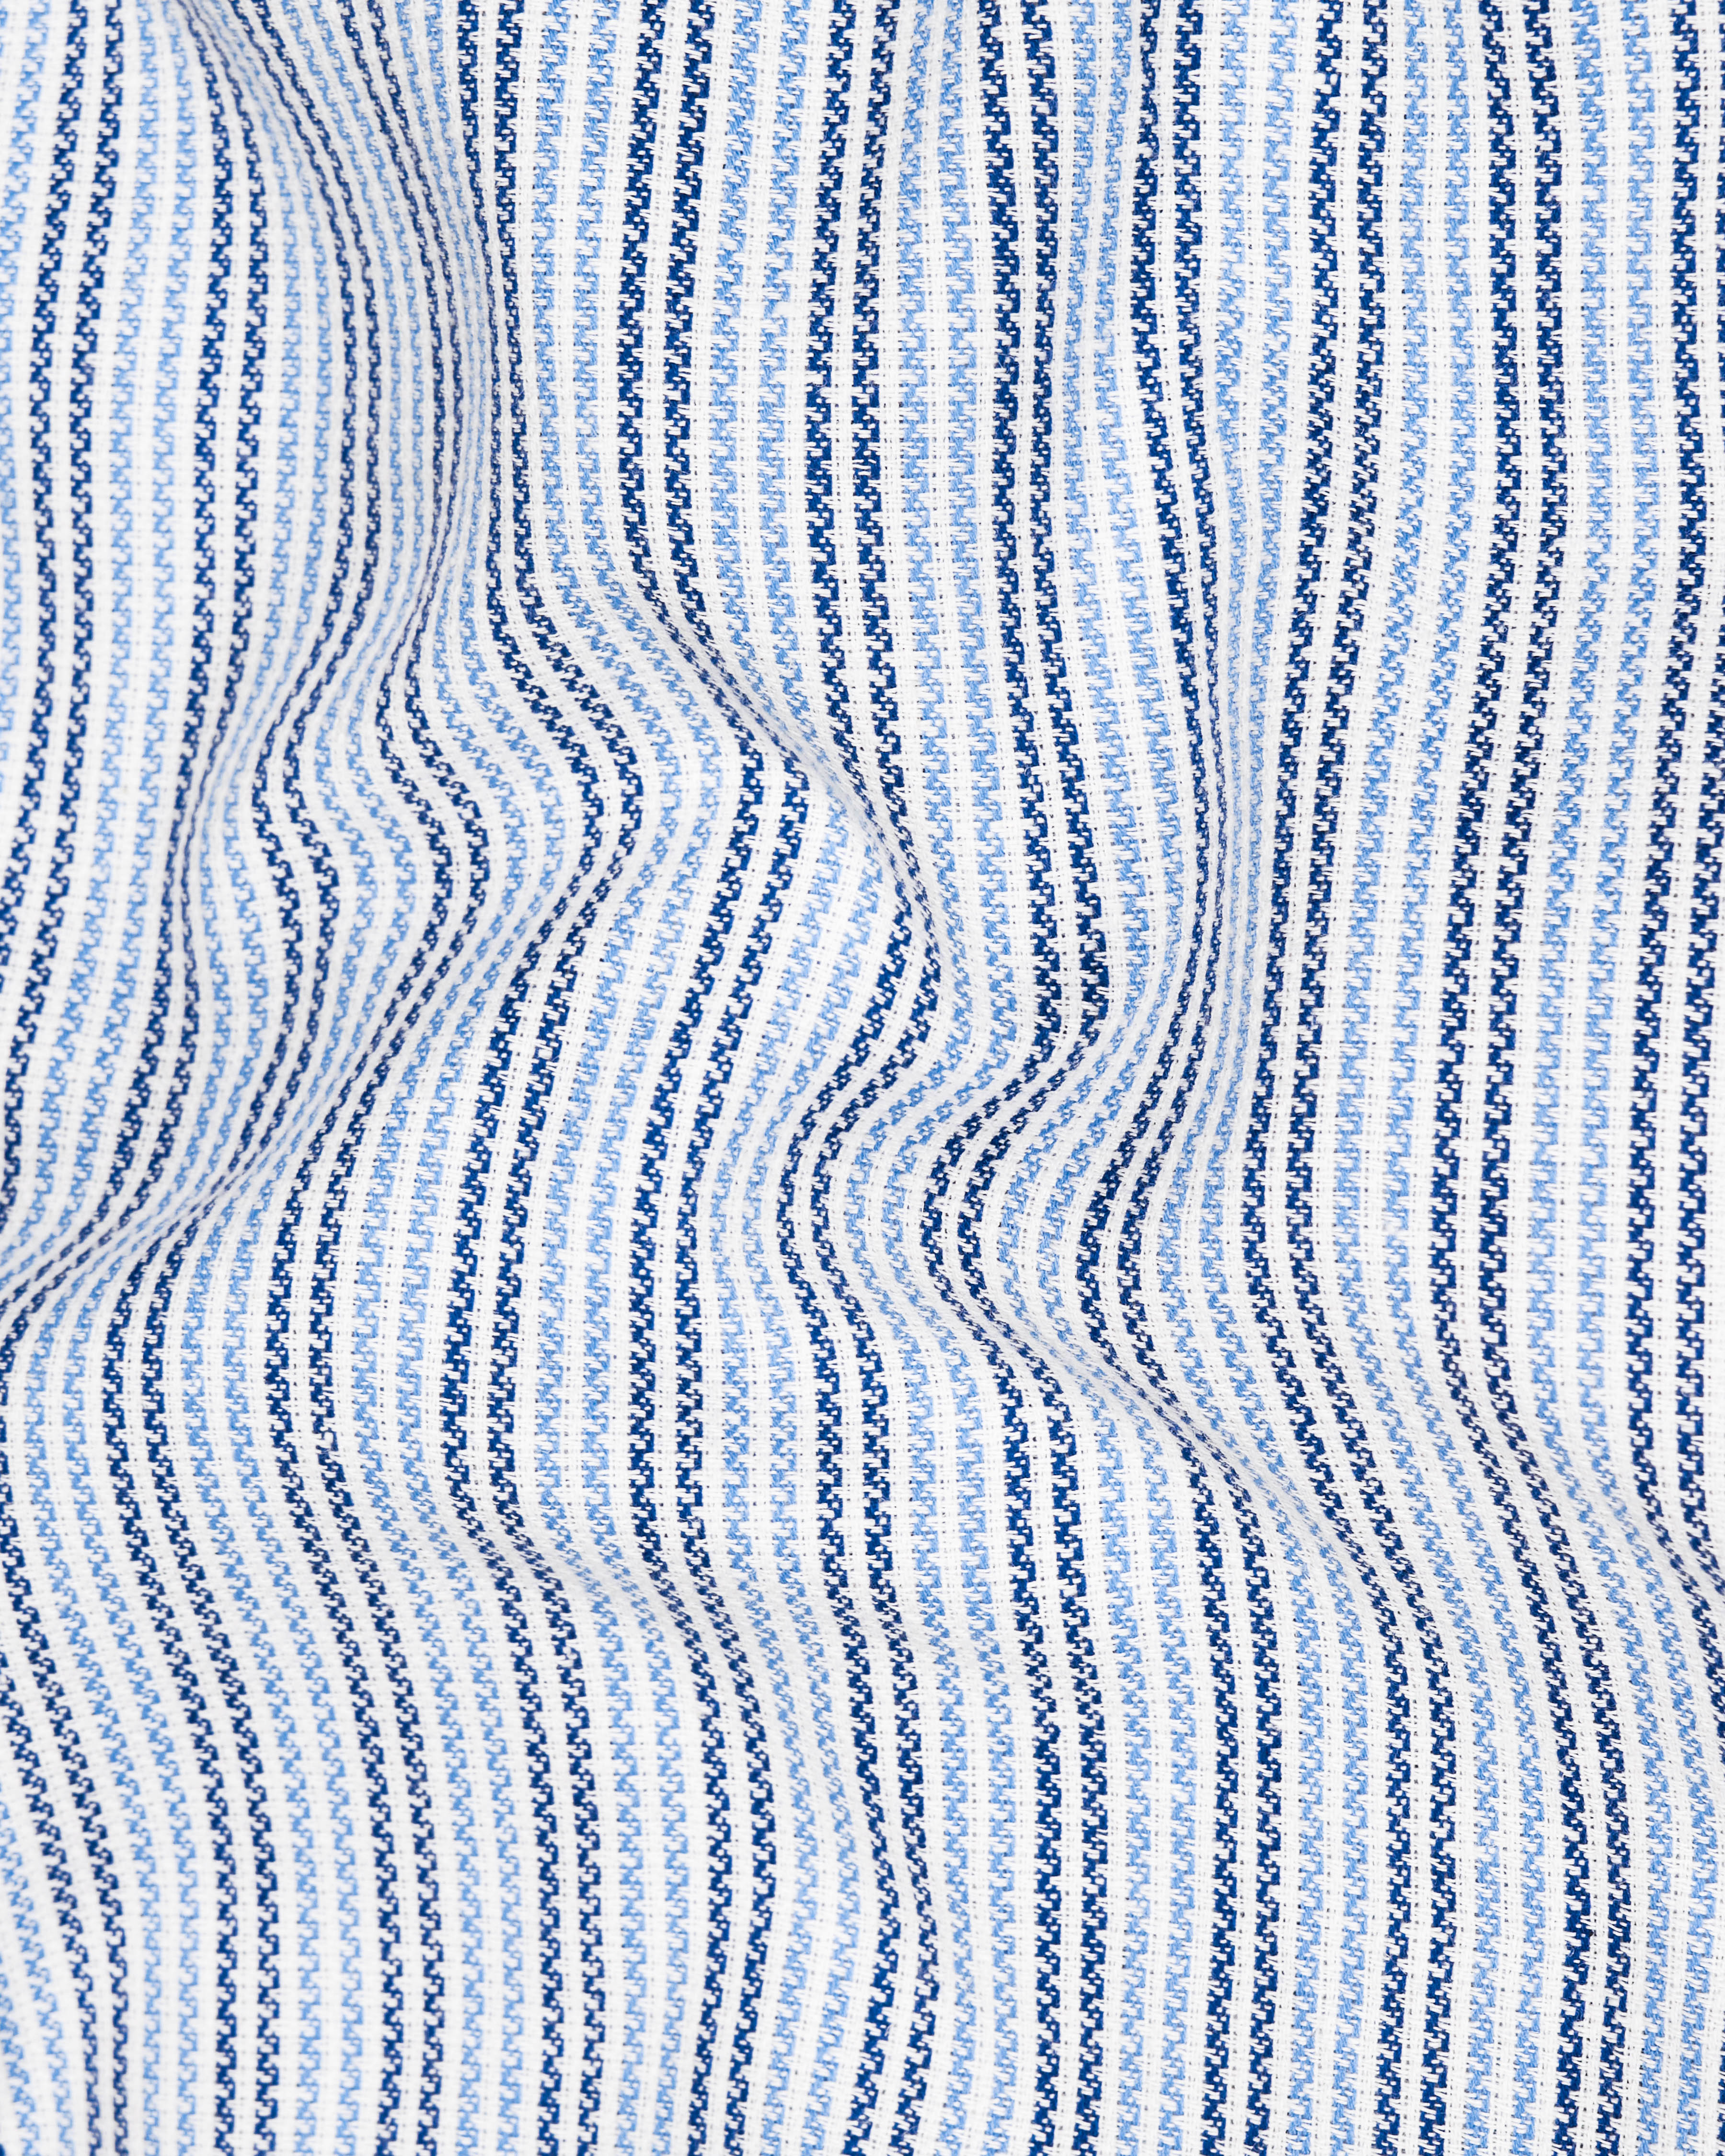 Cerulean with Glacier Blue Striped Dobby Textured Premium Giza Cotton Polo Shirt 9454-BLE-P392-H-38, 9454-BLE-P392-H-39, 9454-BLE-P392-H-40, 9454-BLE-P392-H-42, 9454-BLE-P392-H-44, 9454-BLE-P392-H-46, 9454-BLE-P392-H-48, 9454-BLE-P392-H-50,  9454-BLE-P392-H-52